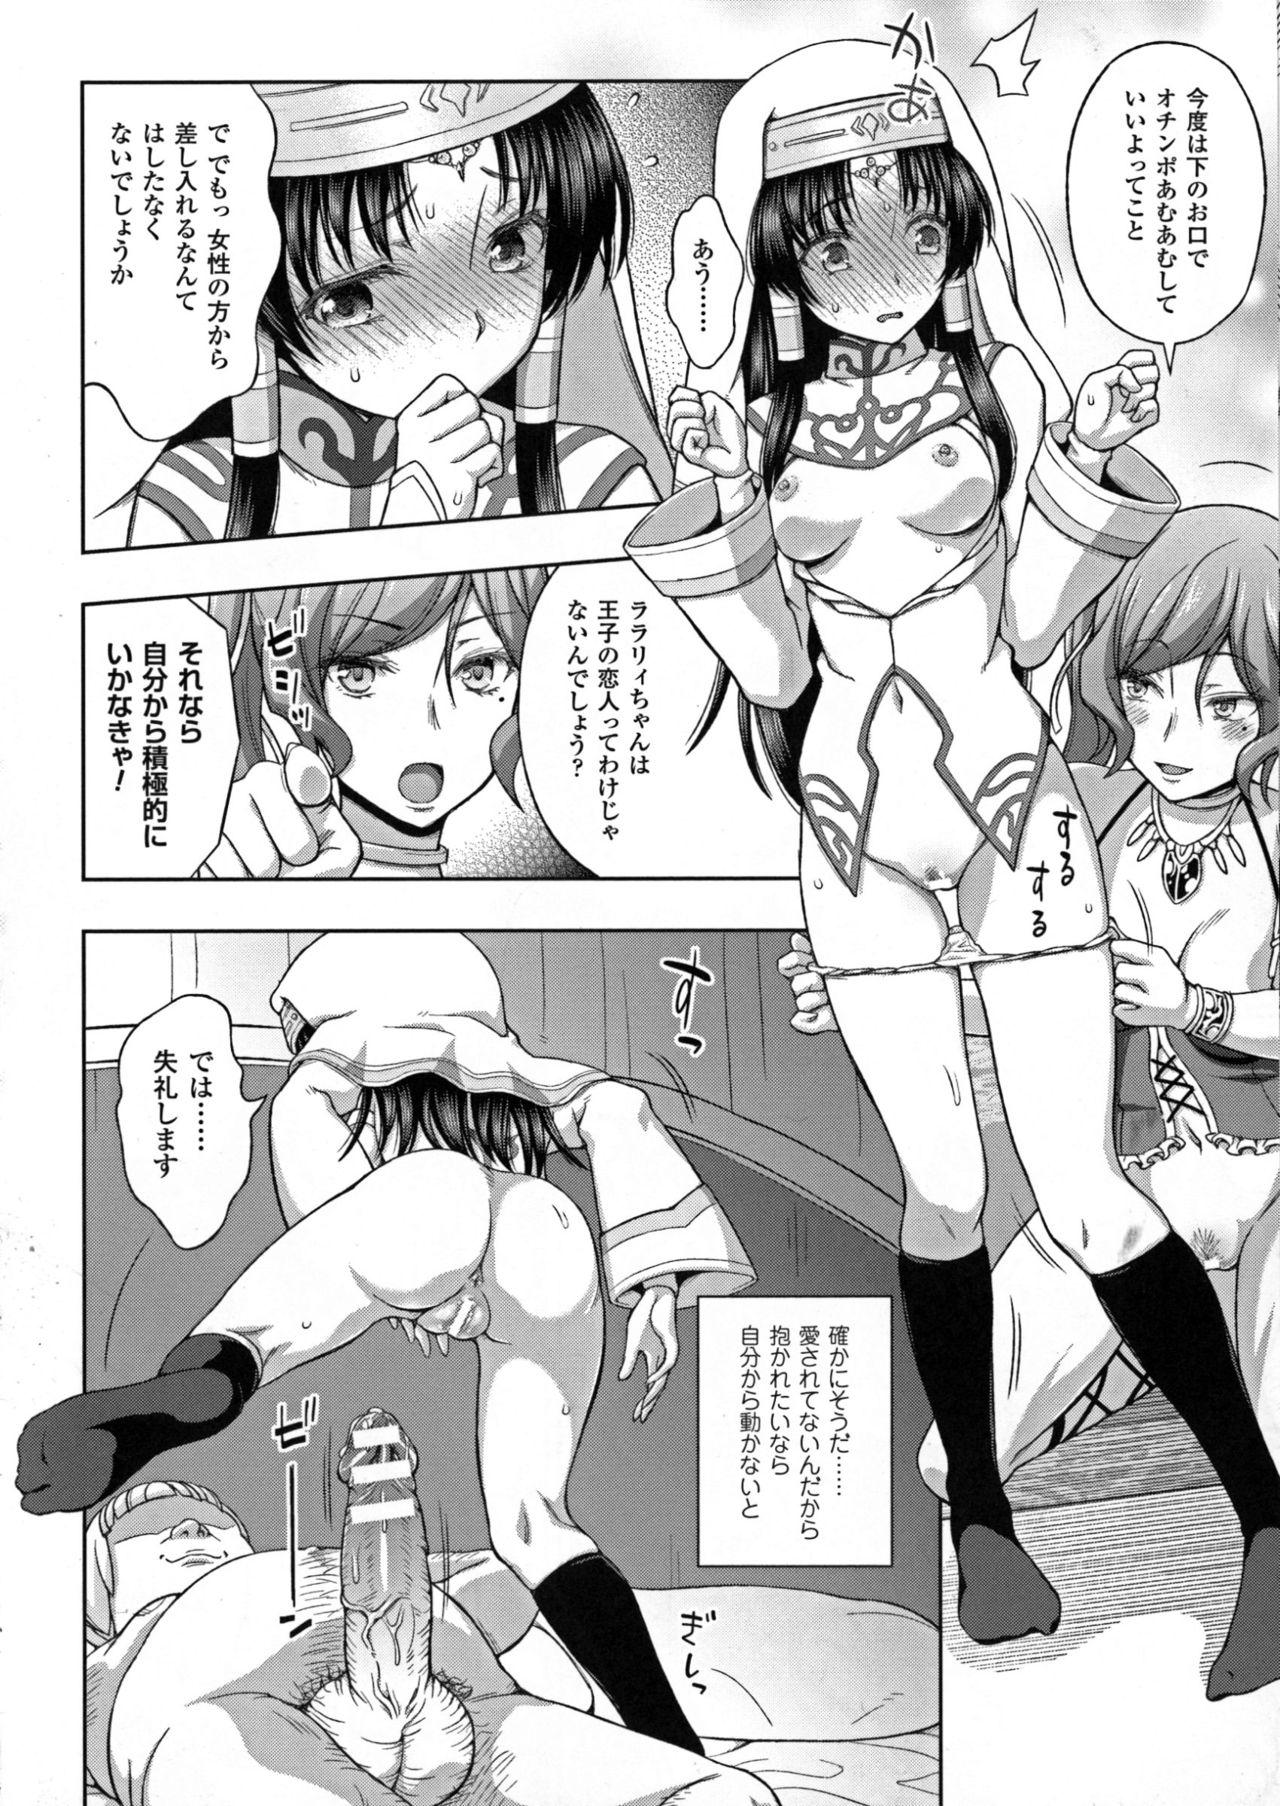 Seigi no Heroine Kangoku File DX Vol. 7 41